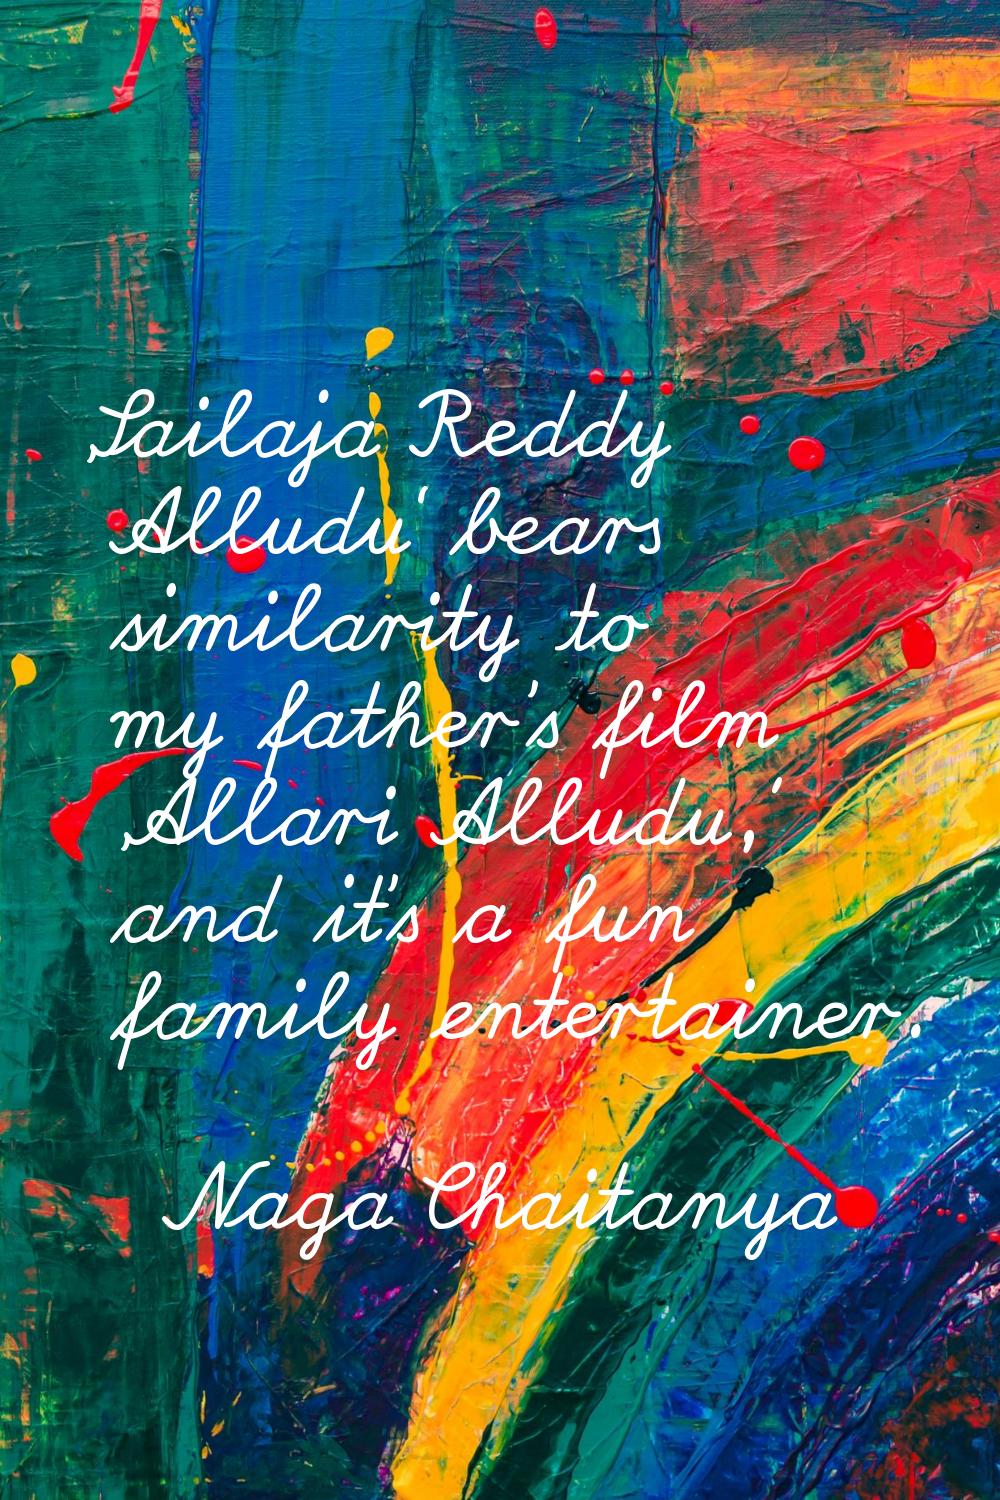 'Sailaja Reddy Alludu' bears similarity to my father's film 'Allari Alludu,' and it's a fun family 